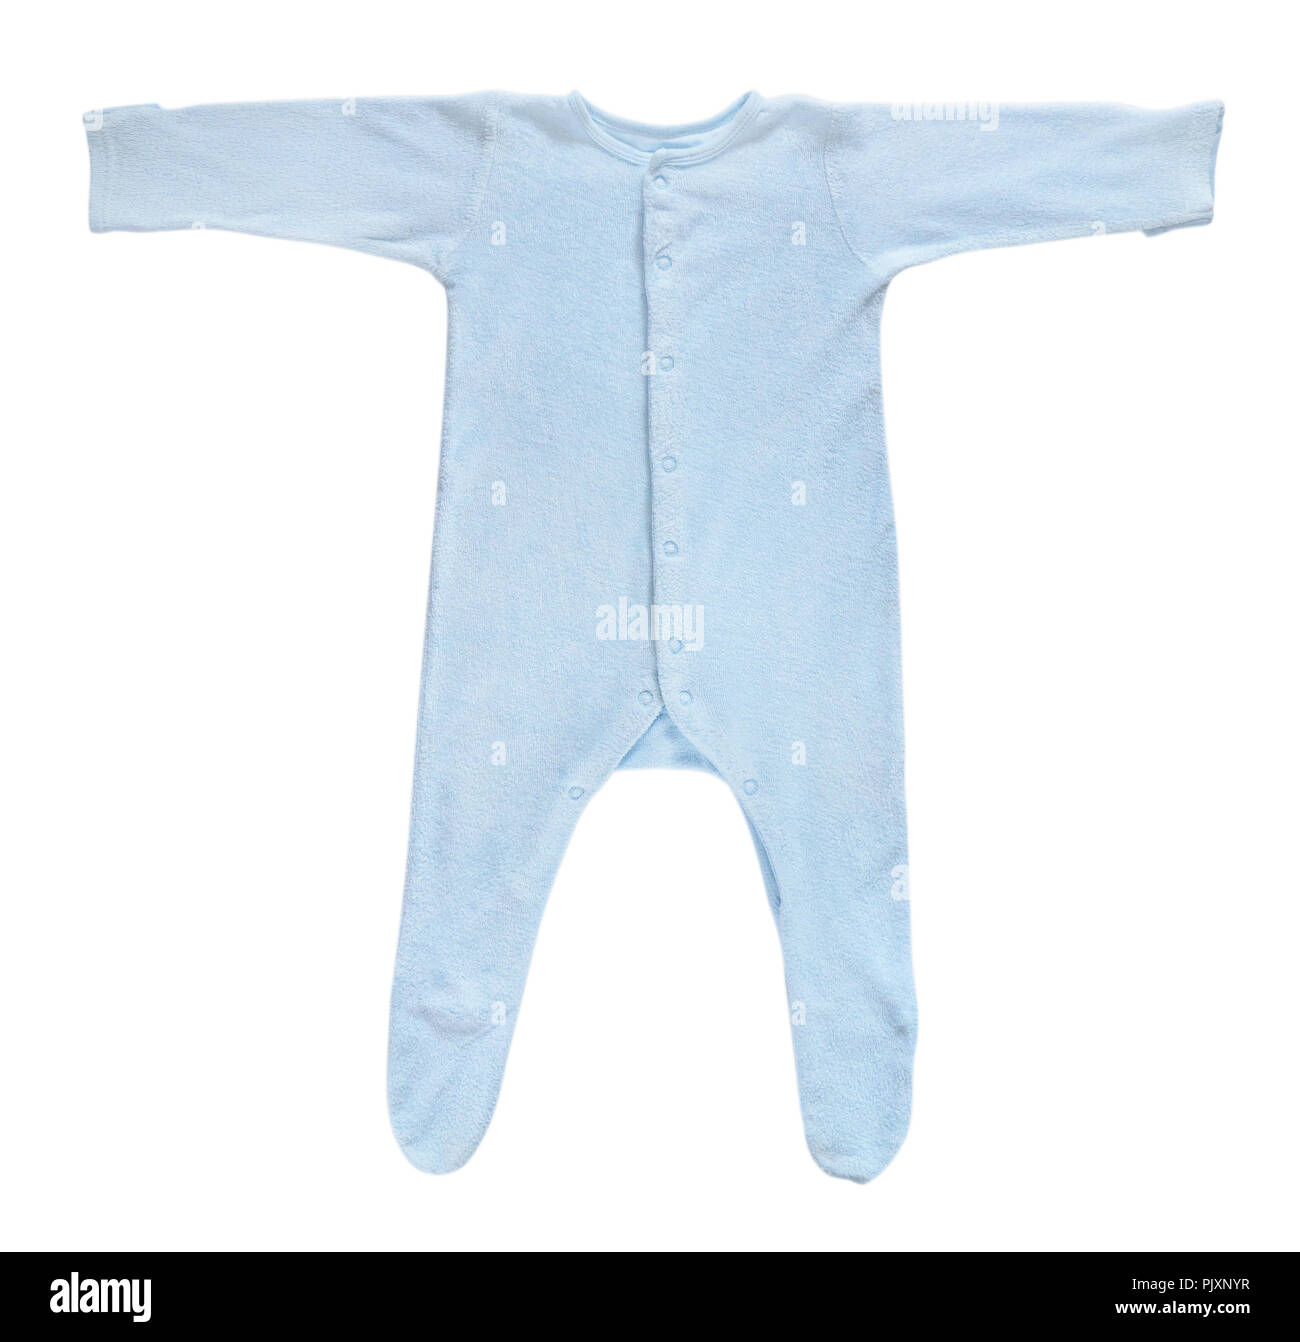 Blue baby sleeper clothes isolated on white background Stock Photo